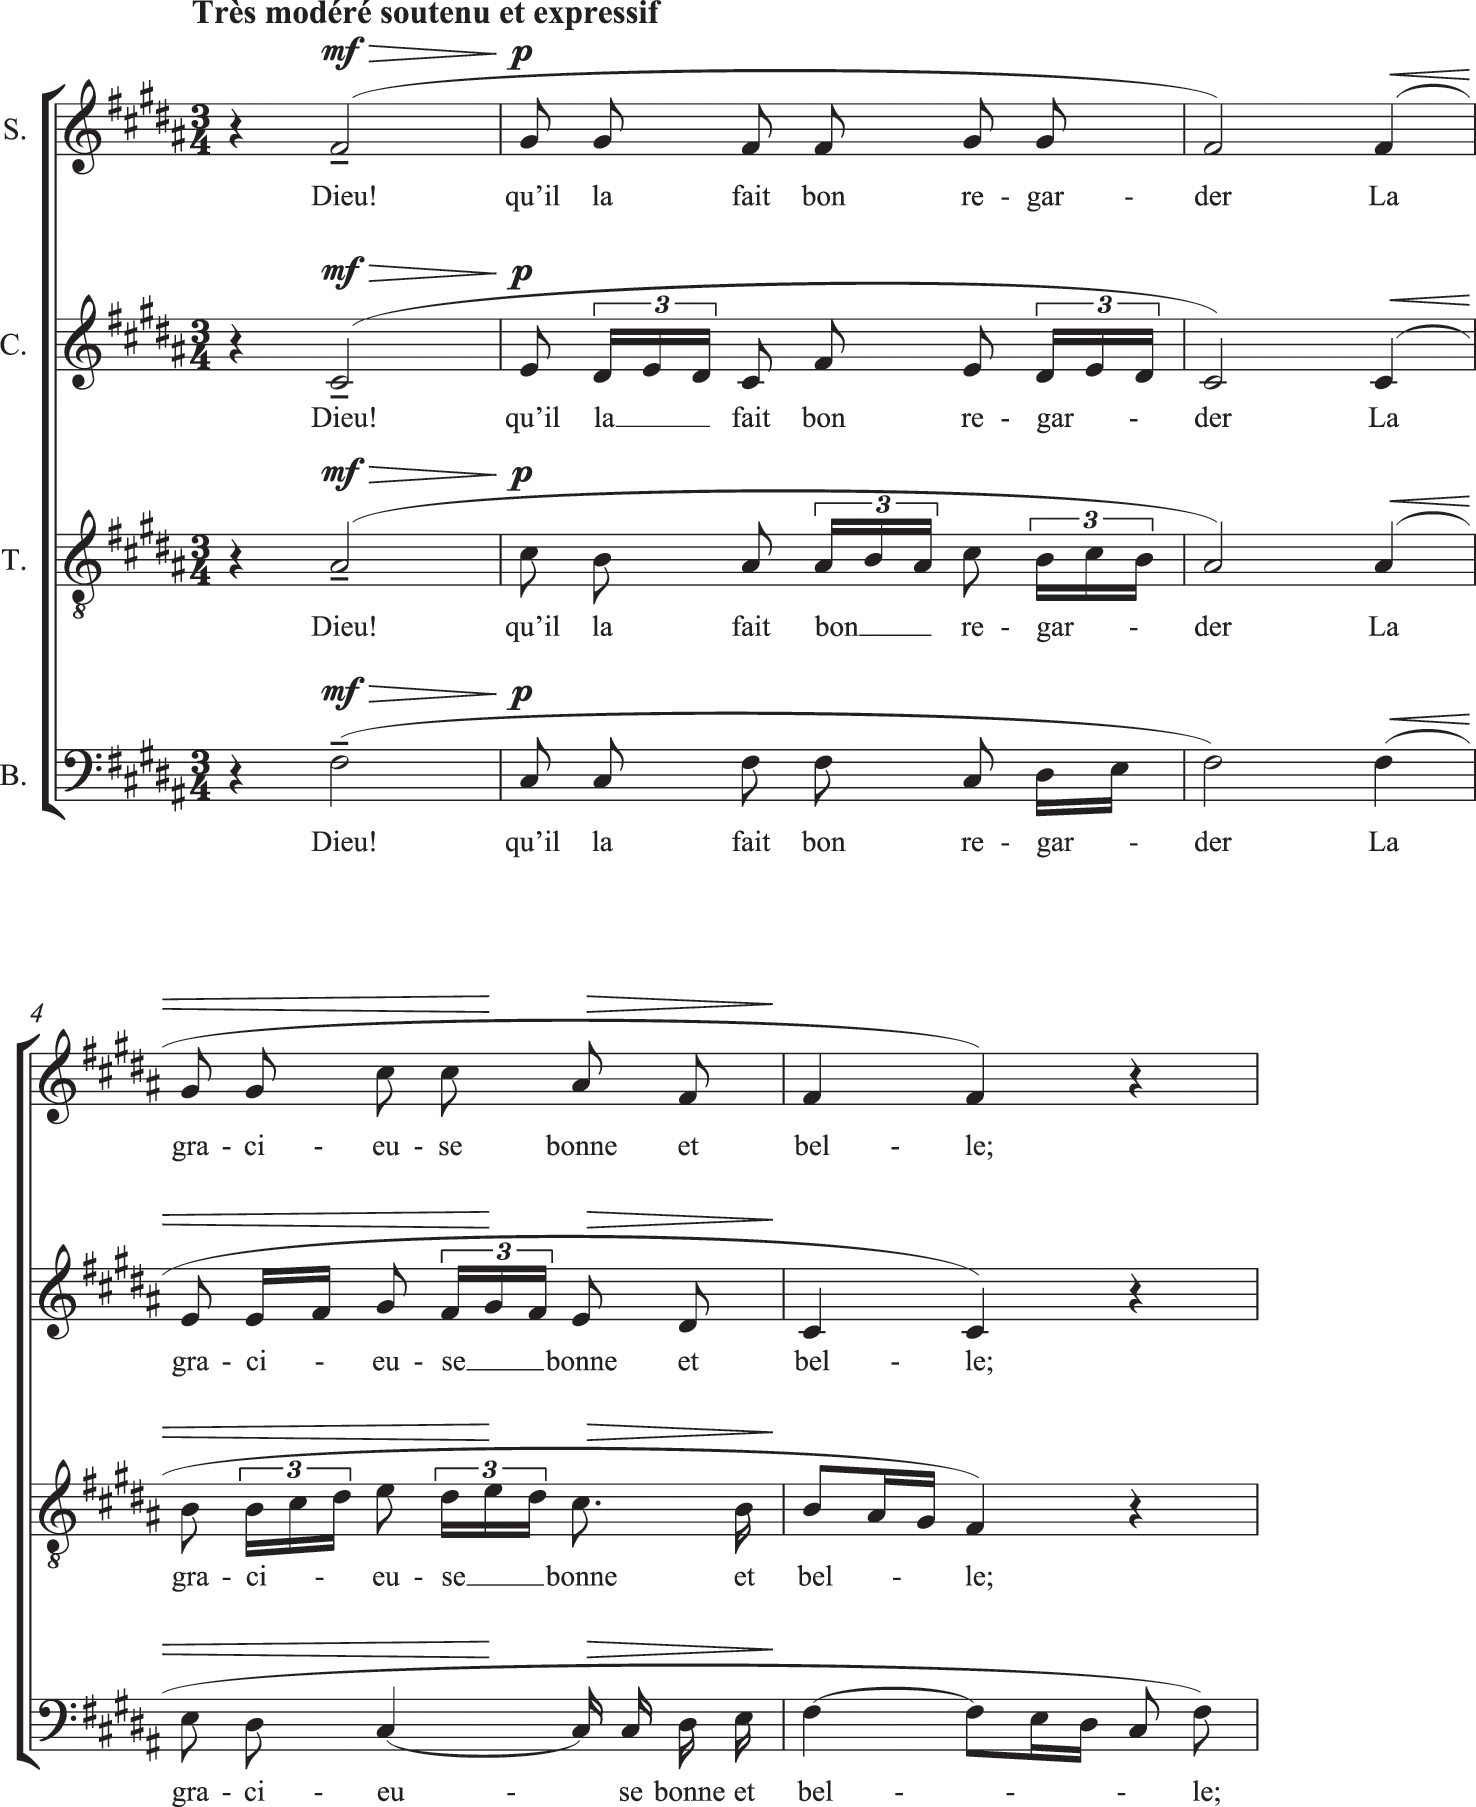 Piano Livres et partitions - Piano Vertu